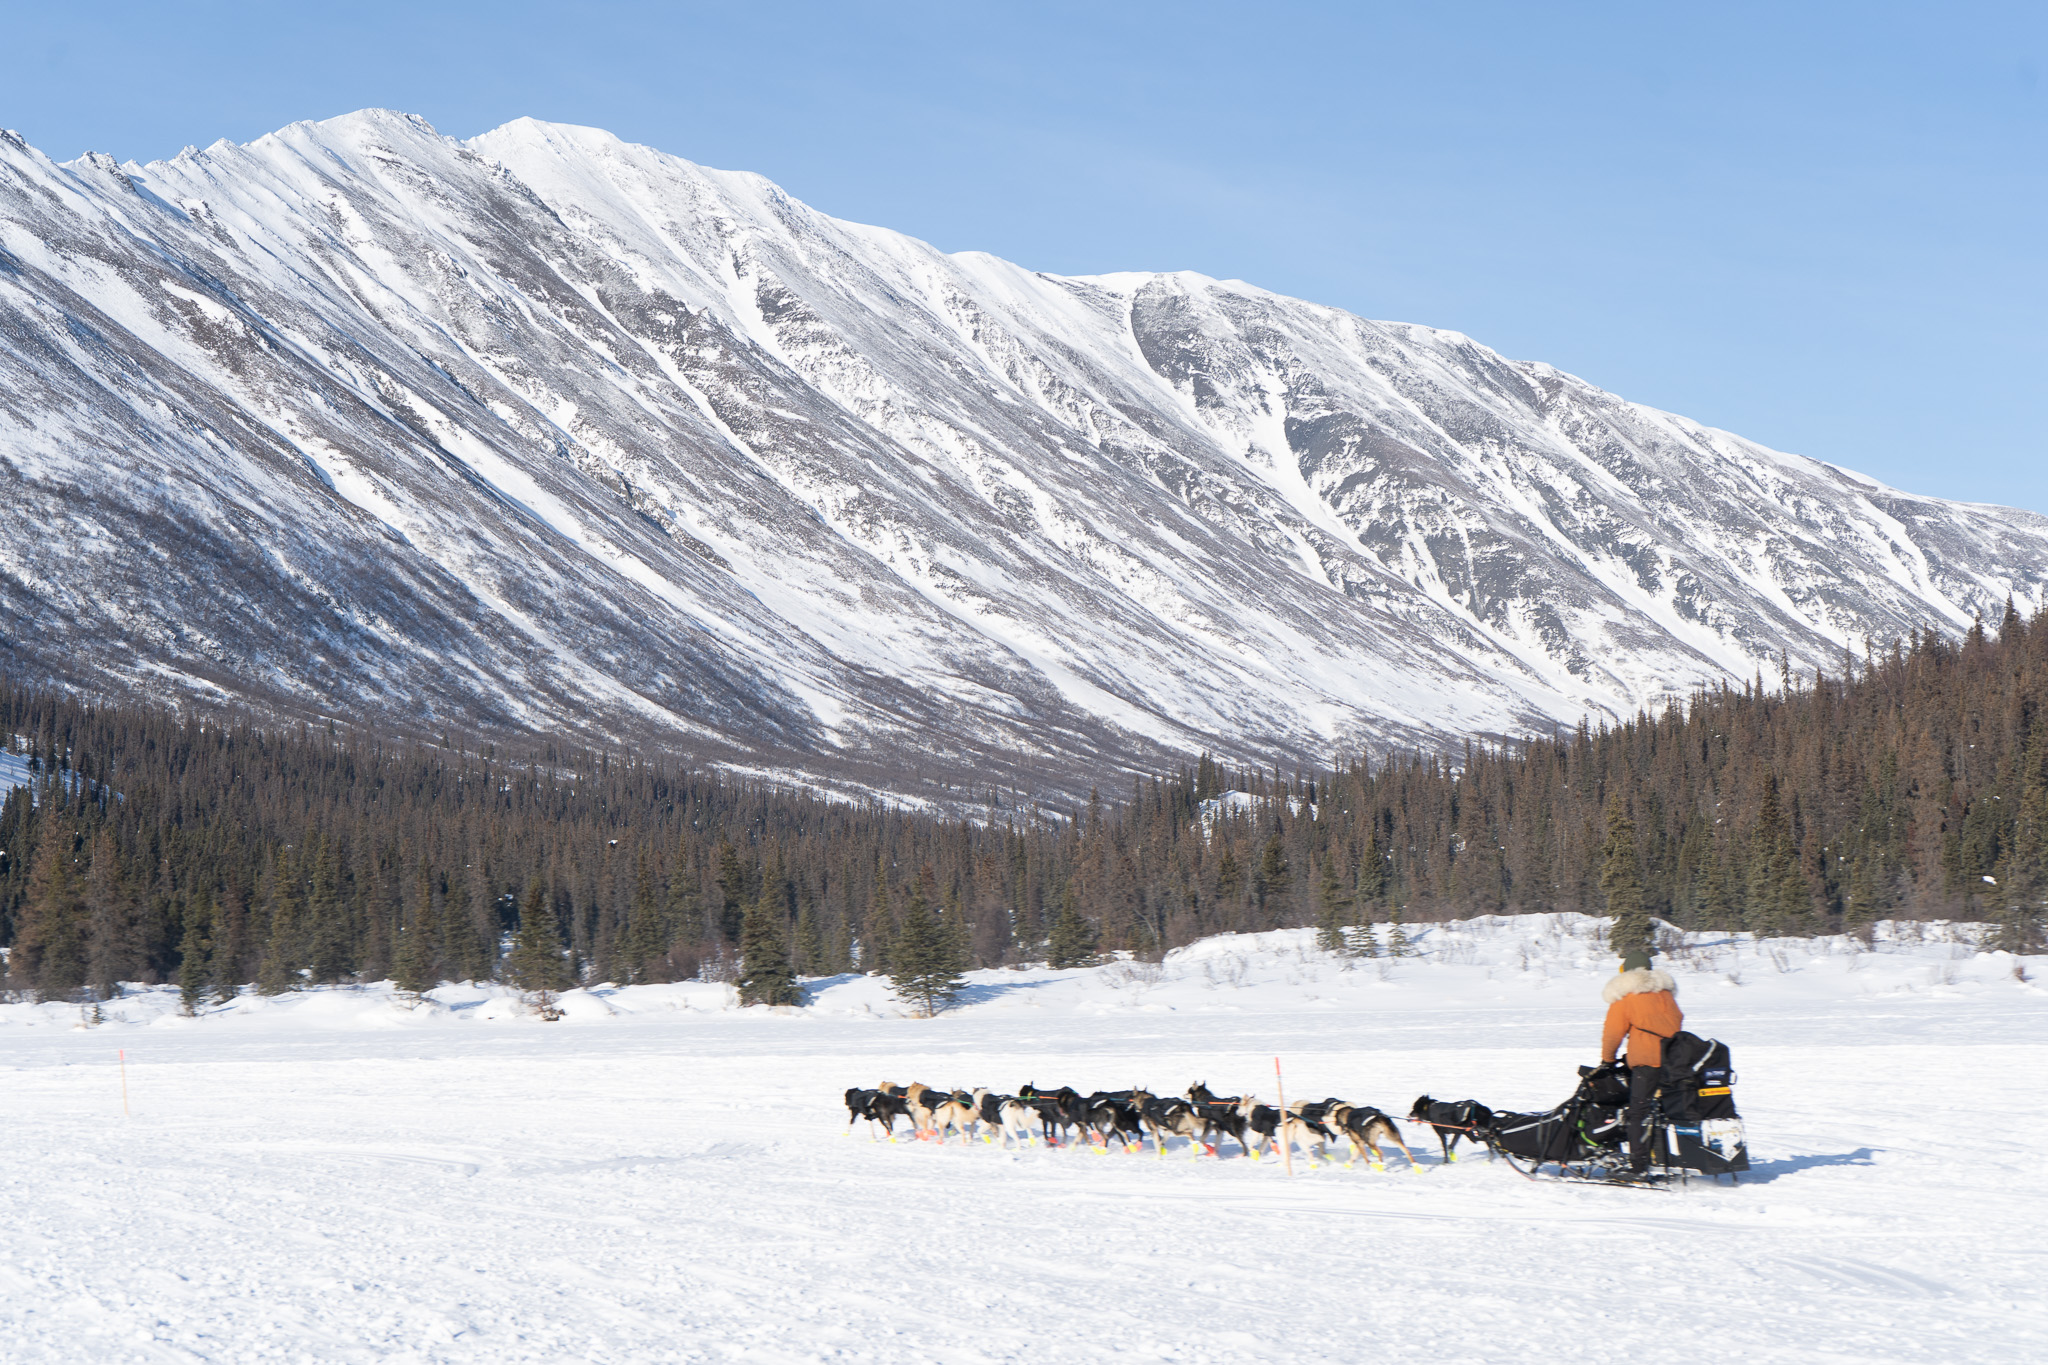 A man in an orange parka rides a dog team towards some snowy mountains